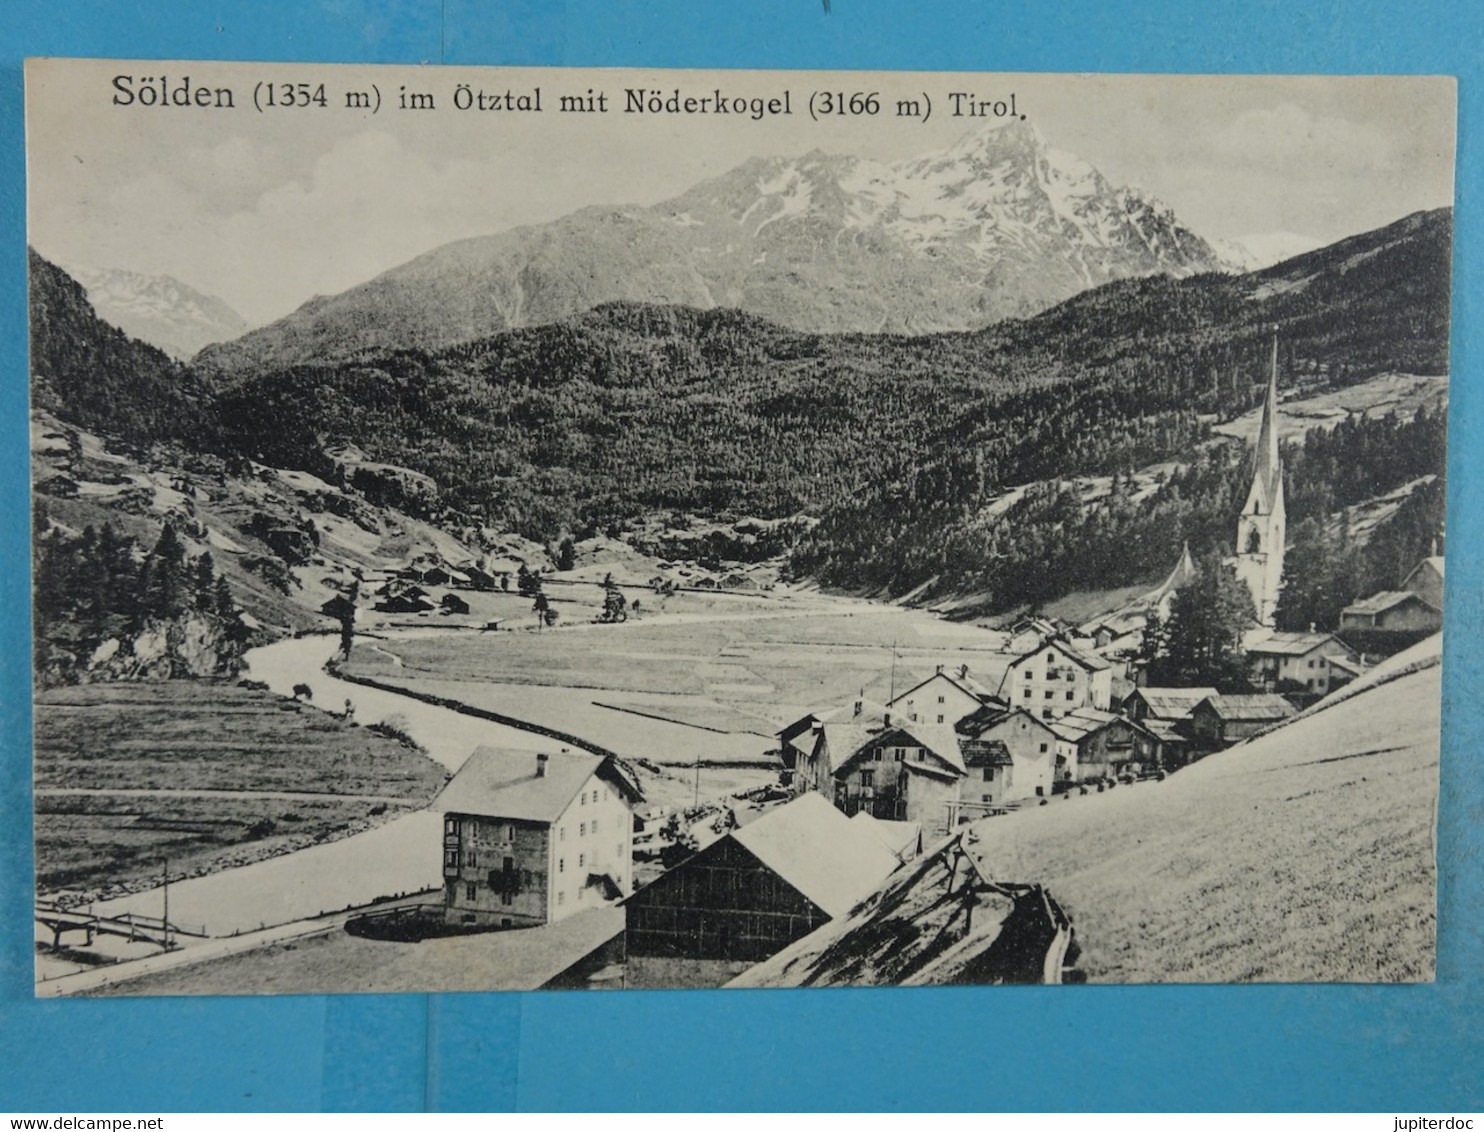 Solden Im Otztal Mit Noderkogel (3166 M) Tirol - Sölden